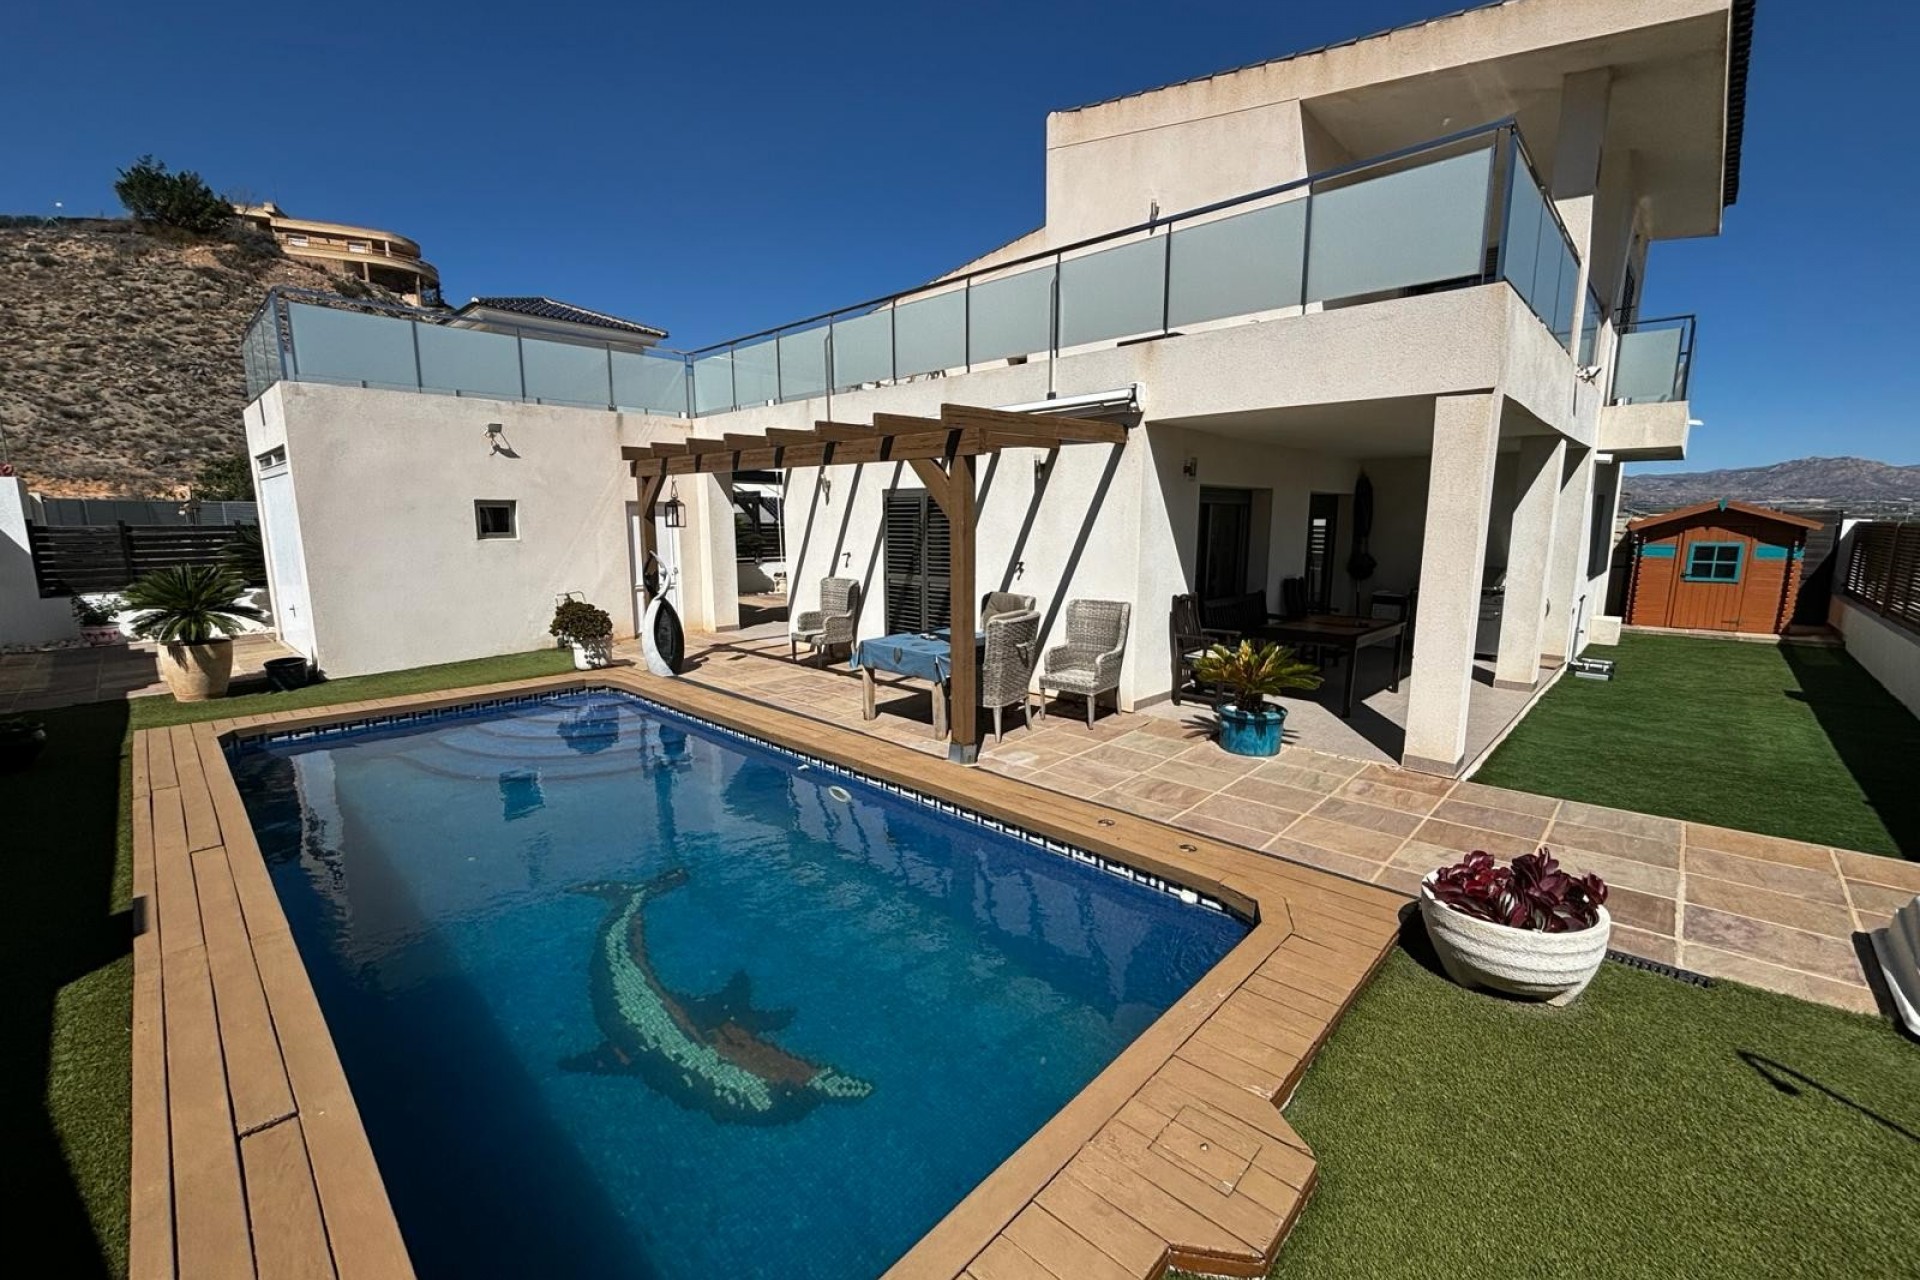 3 bedroom house / villa for sale in Cox, Costa Blanca